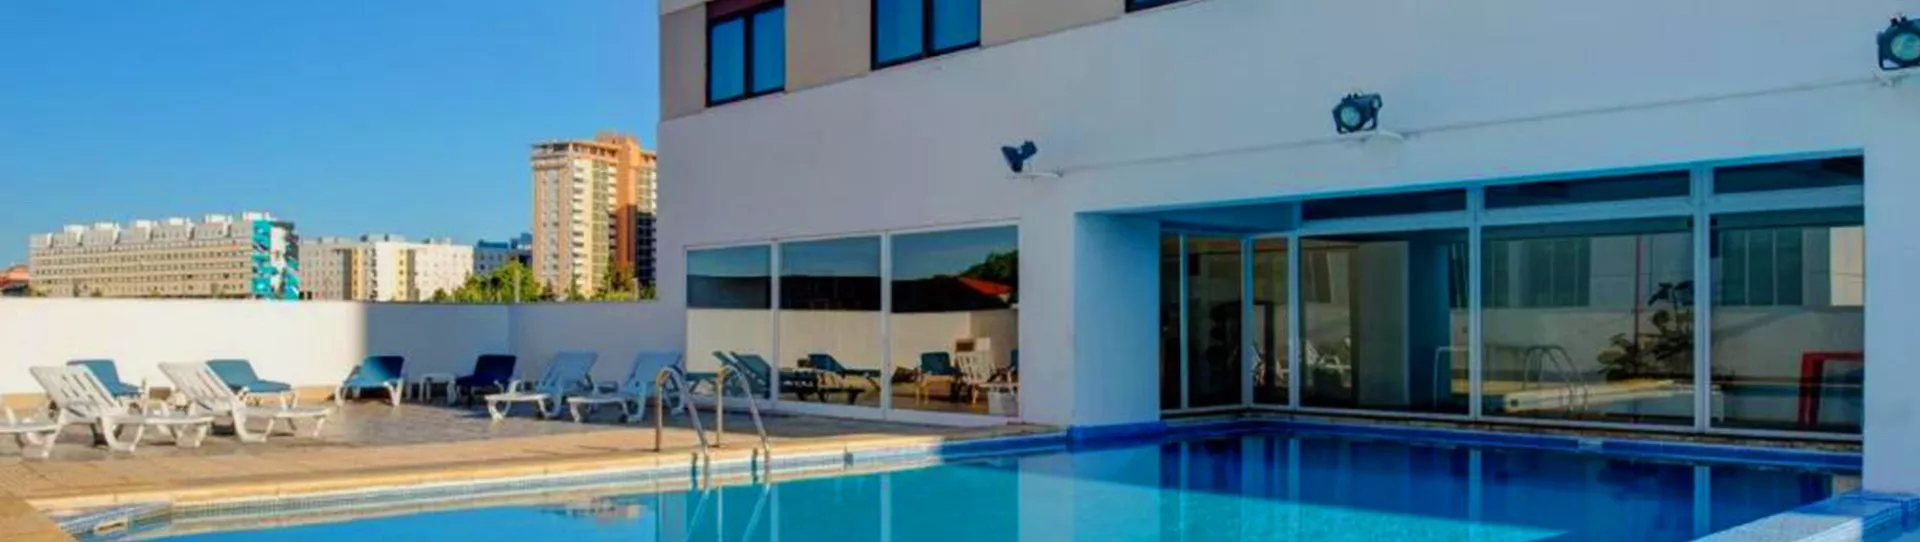 Portugal golf holidays - Vip Executive Zurique Hotel - Photo 1